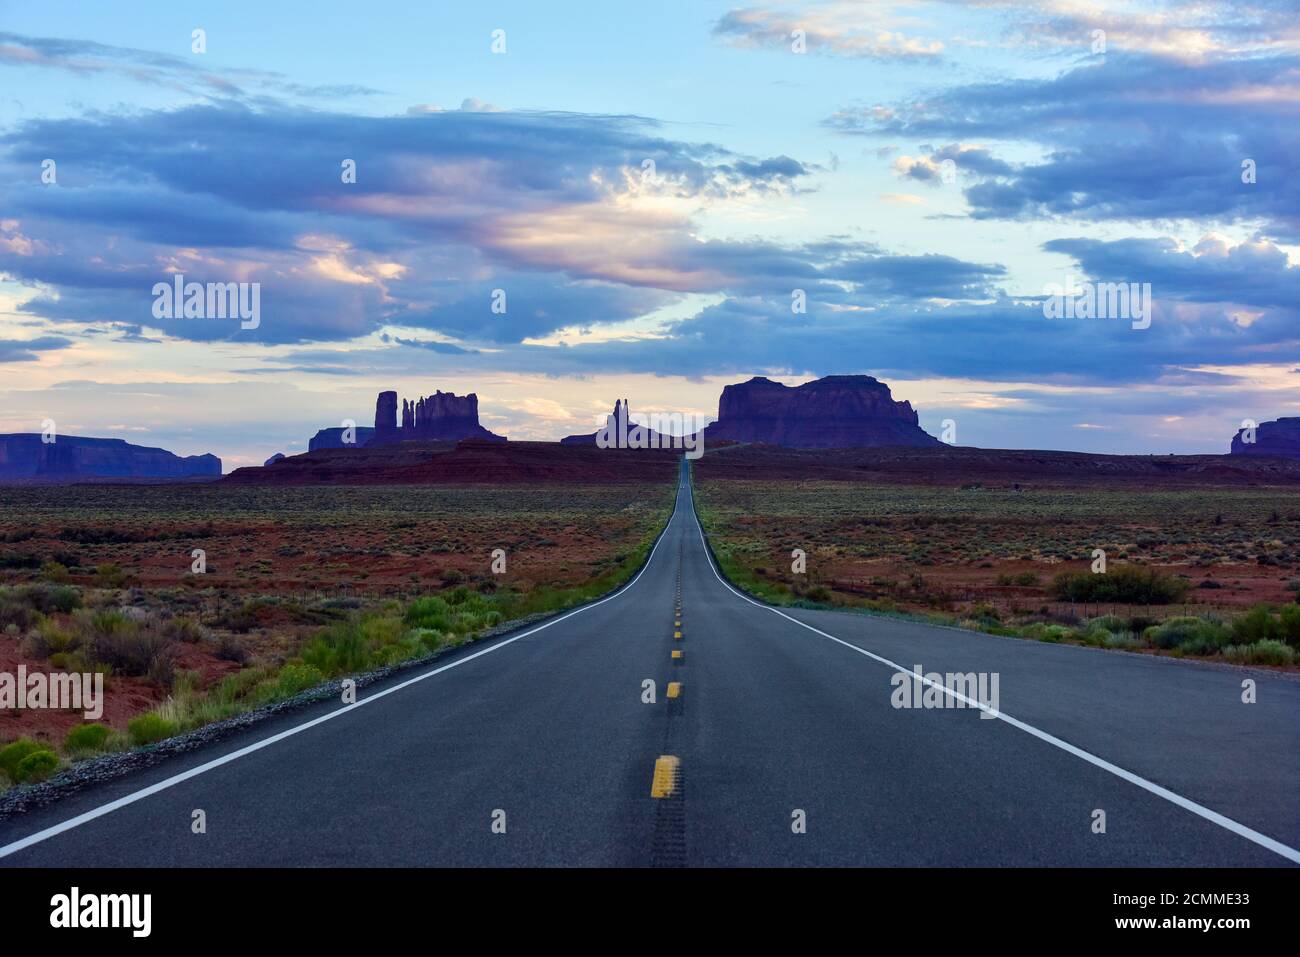 Monument Valley Arizona / Utah desert landscape with vanishing perspective of highway into distant landscape. Stock Photo